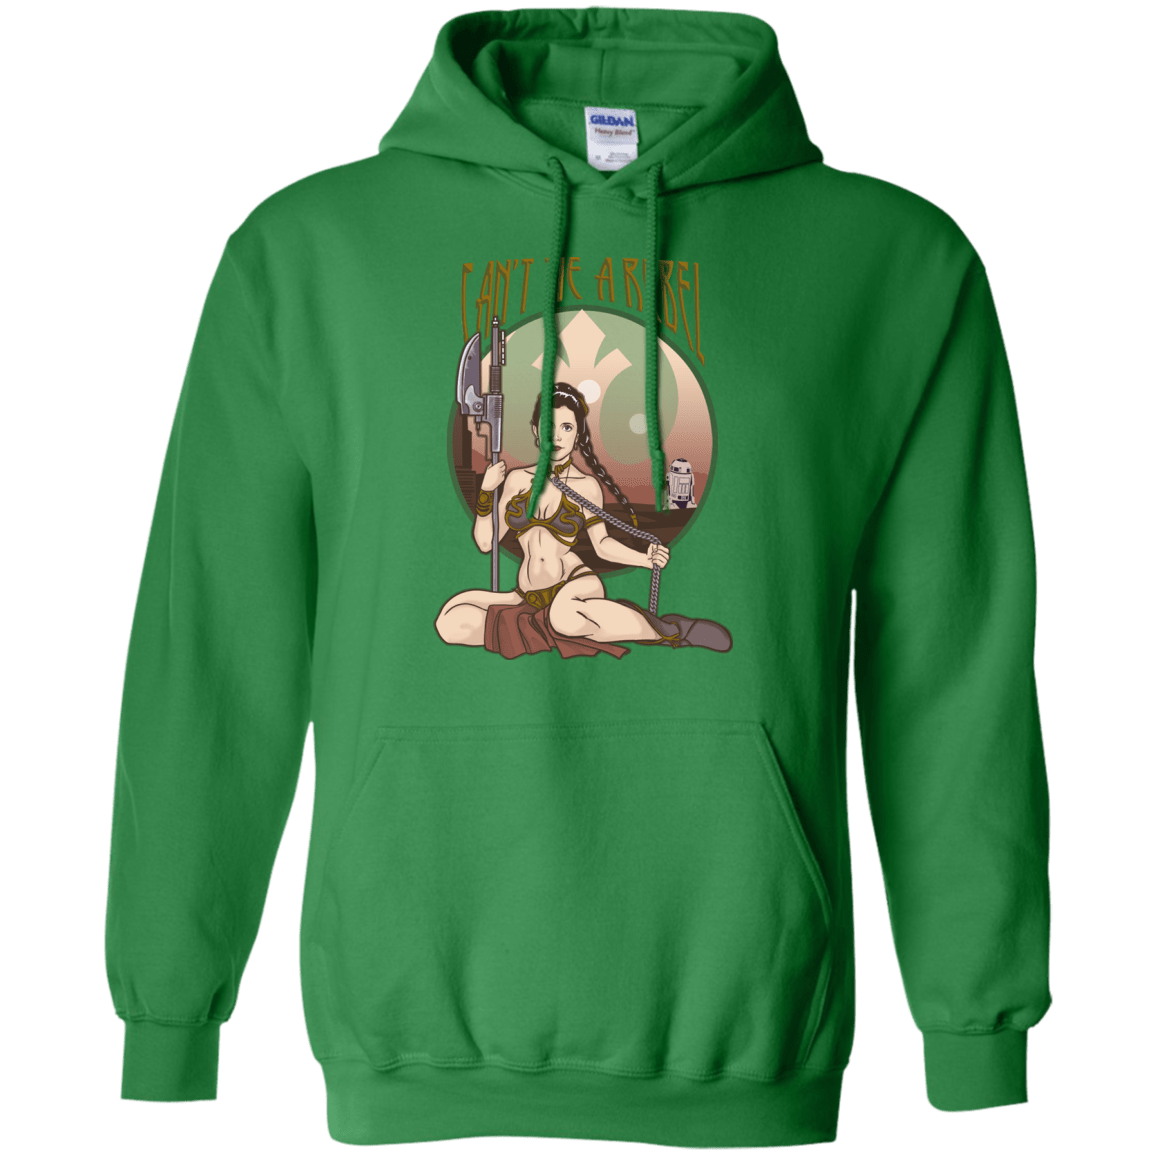 Sweatshirts Irish Green / Small Can't Tie a Rebel Pullover Hoodie